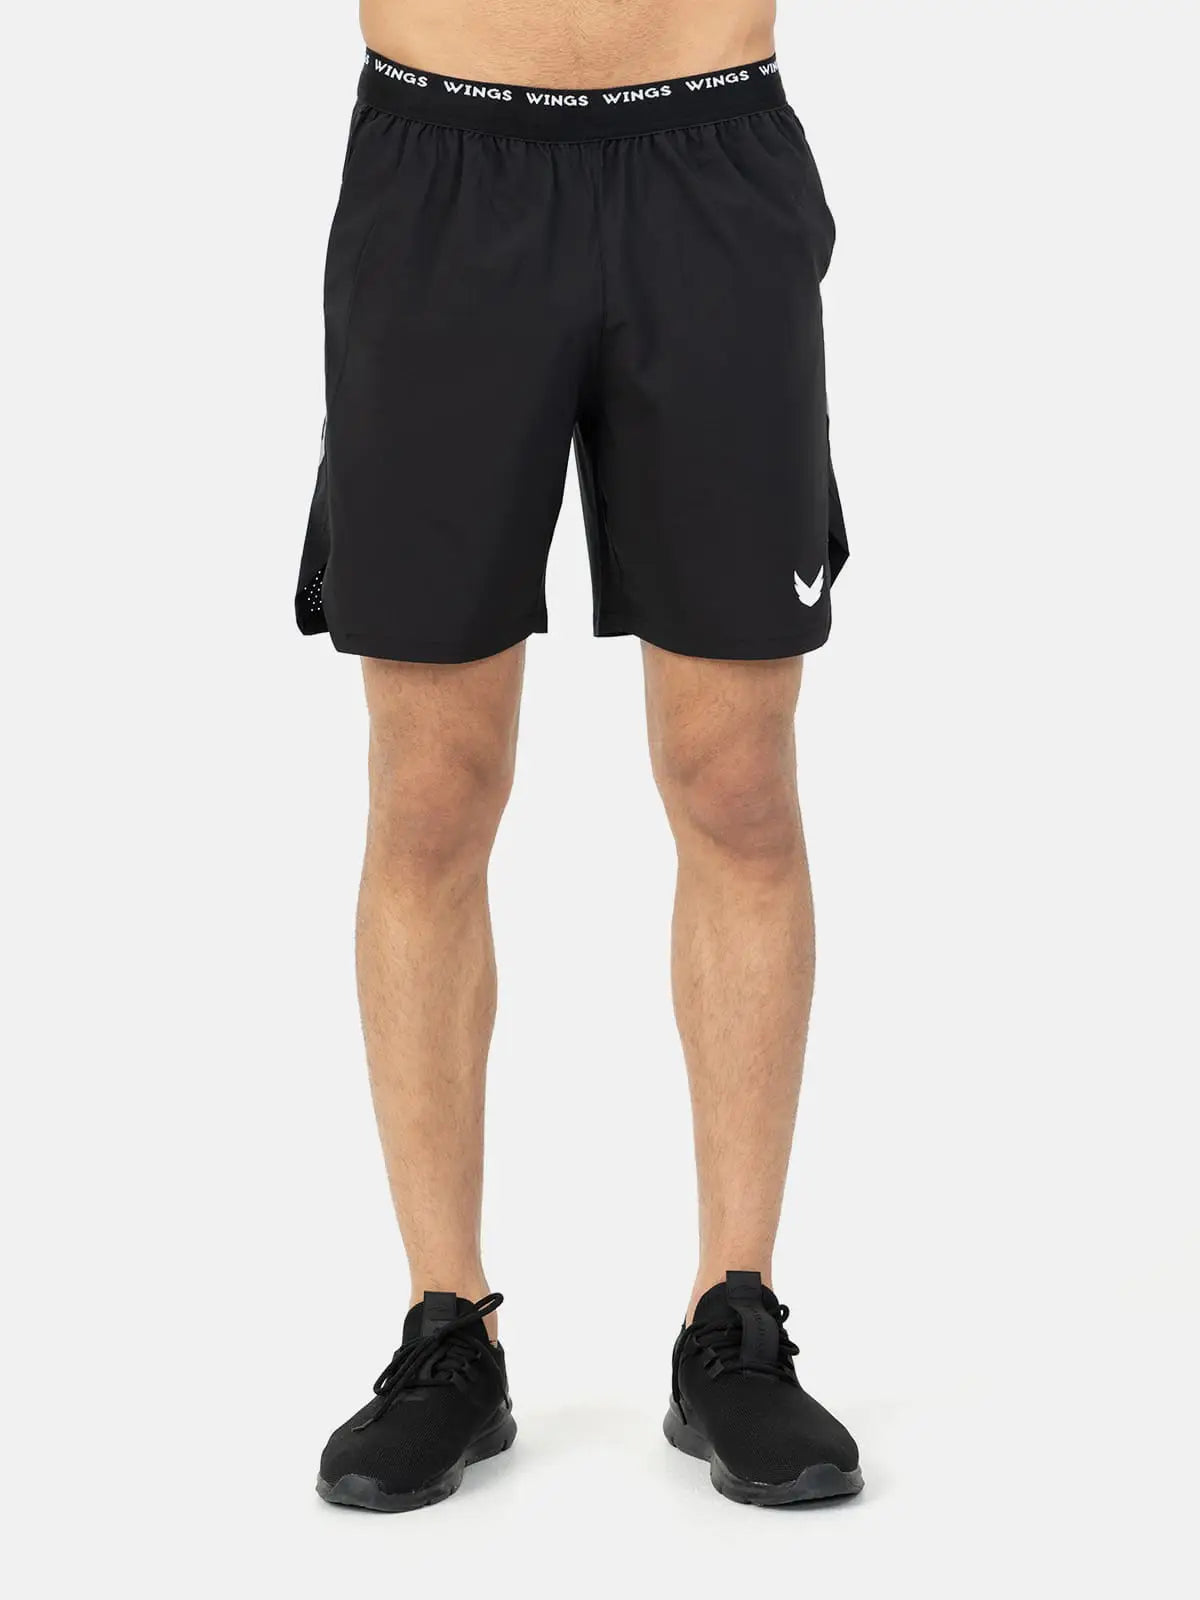 Elastic Waist with Reflective Stripe Open Cut Shorts - Black